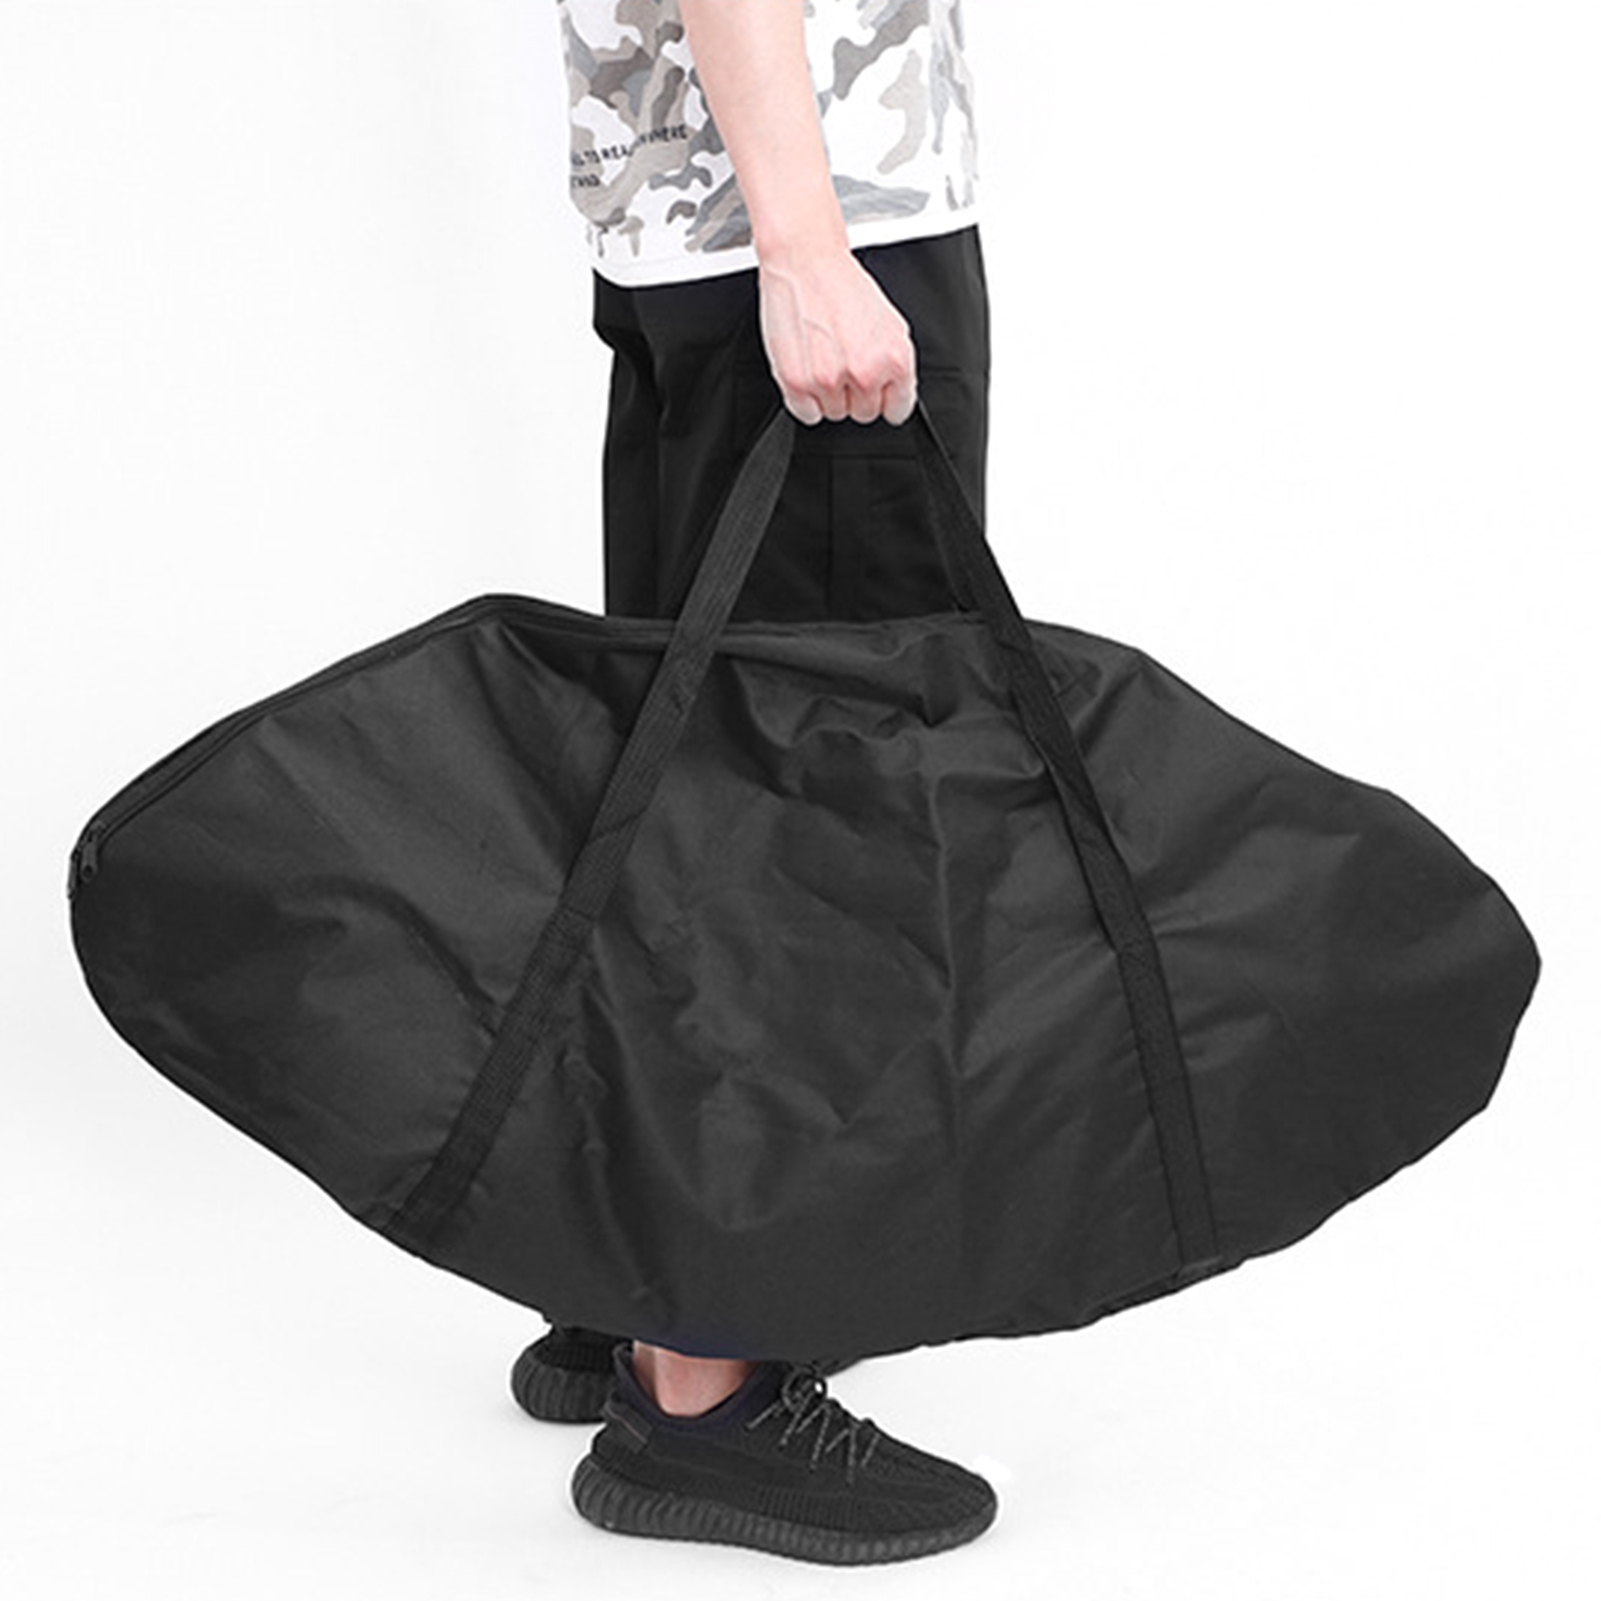 Trampoline Storage Bag Oxford Waterproof Dustproof Organizer for gym, outdoor sports, home storage Trampoline Bags